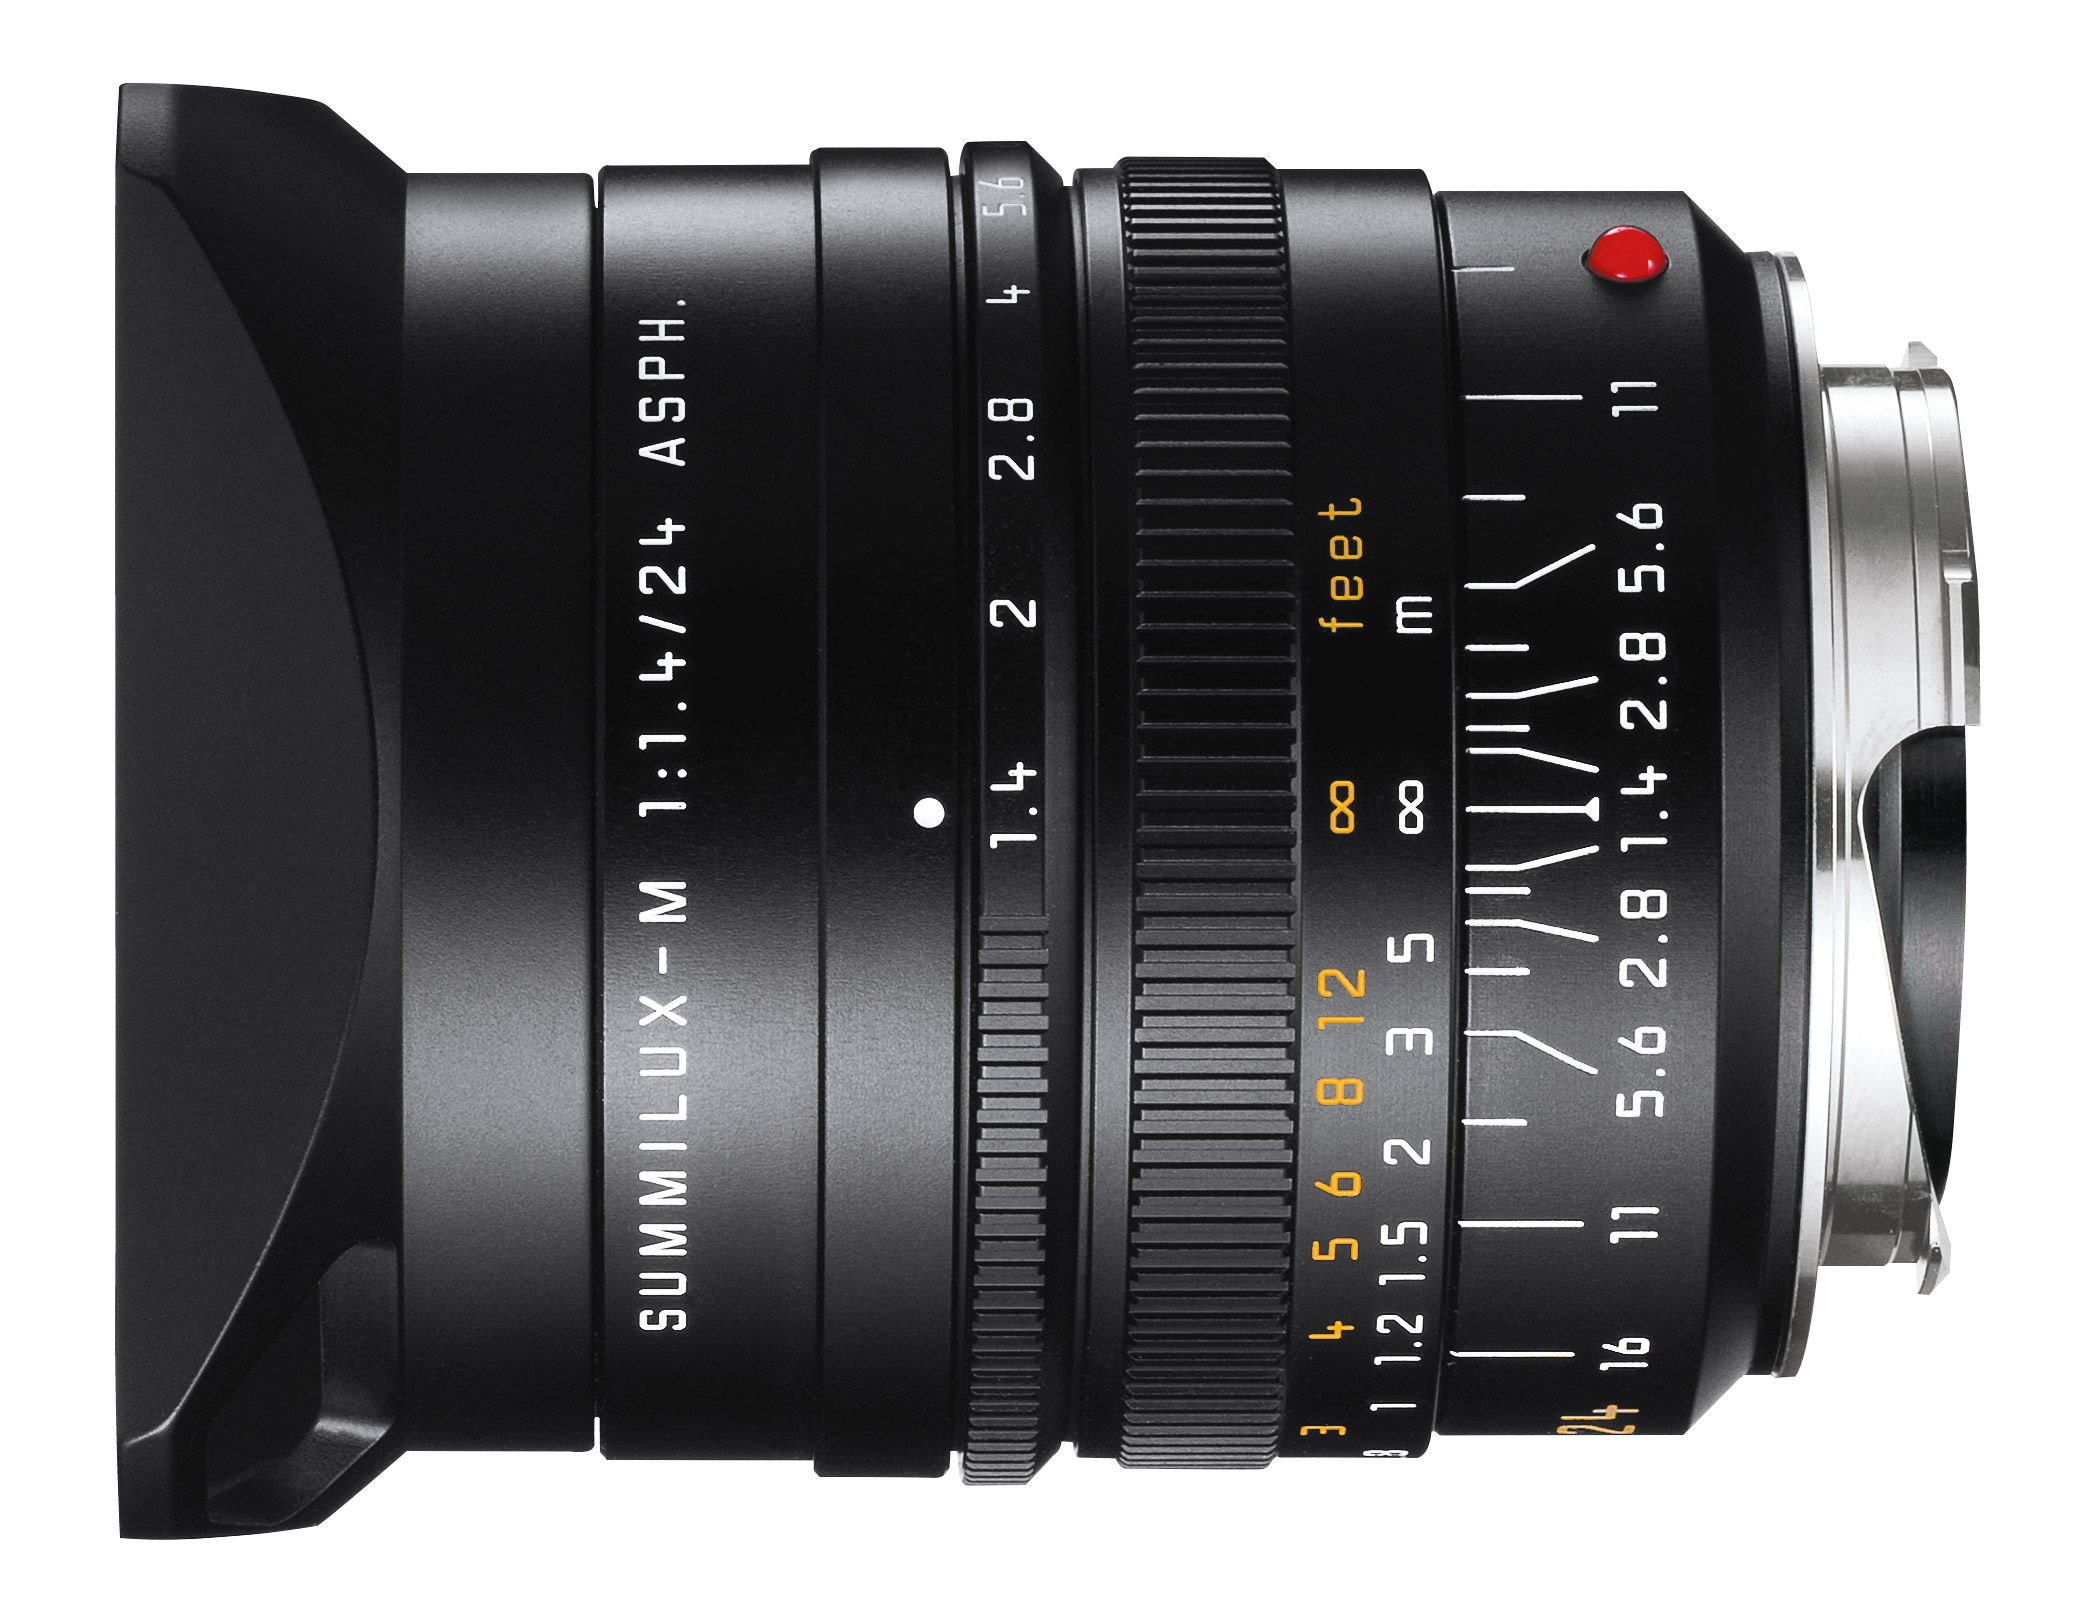 Leica Summilux-M 24mm f/1.4 ASPH